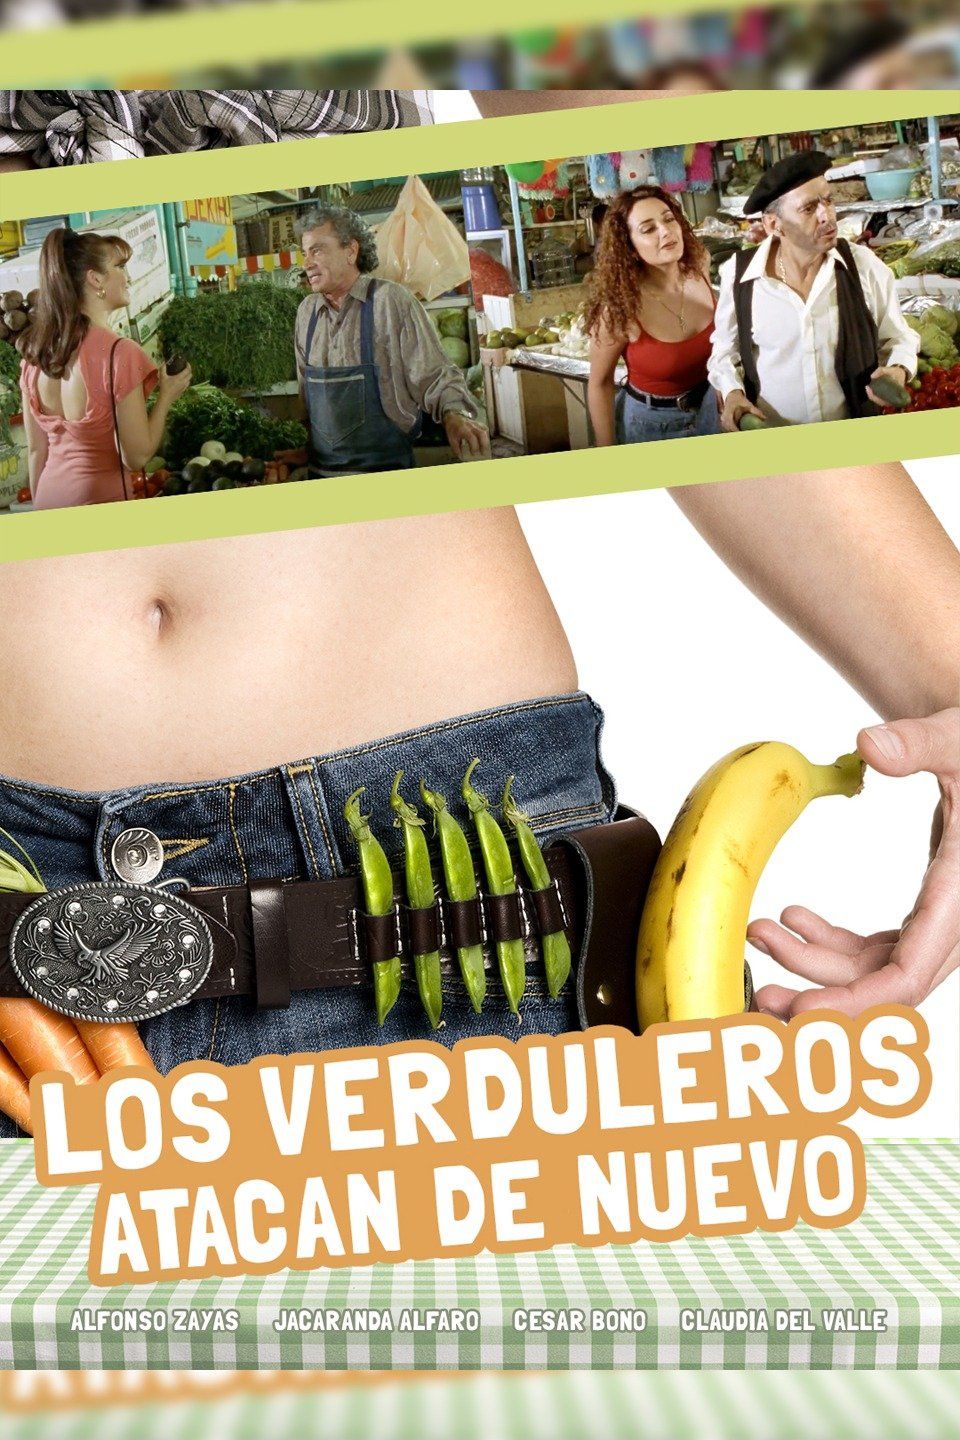  Los Verduleros [DVD] : Anglica Chan, Luis de Alba, Rossy  Mendoza, Tun Tun, Alfonso Zayas, Pedro Infante, Jr., Pedro Infante, Sr.:  Movies & TV